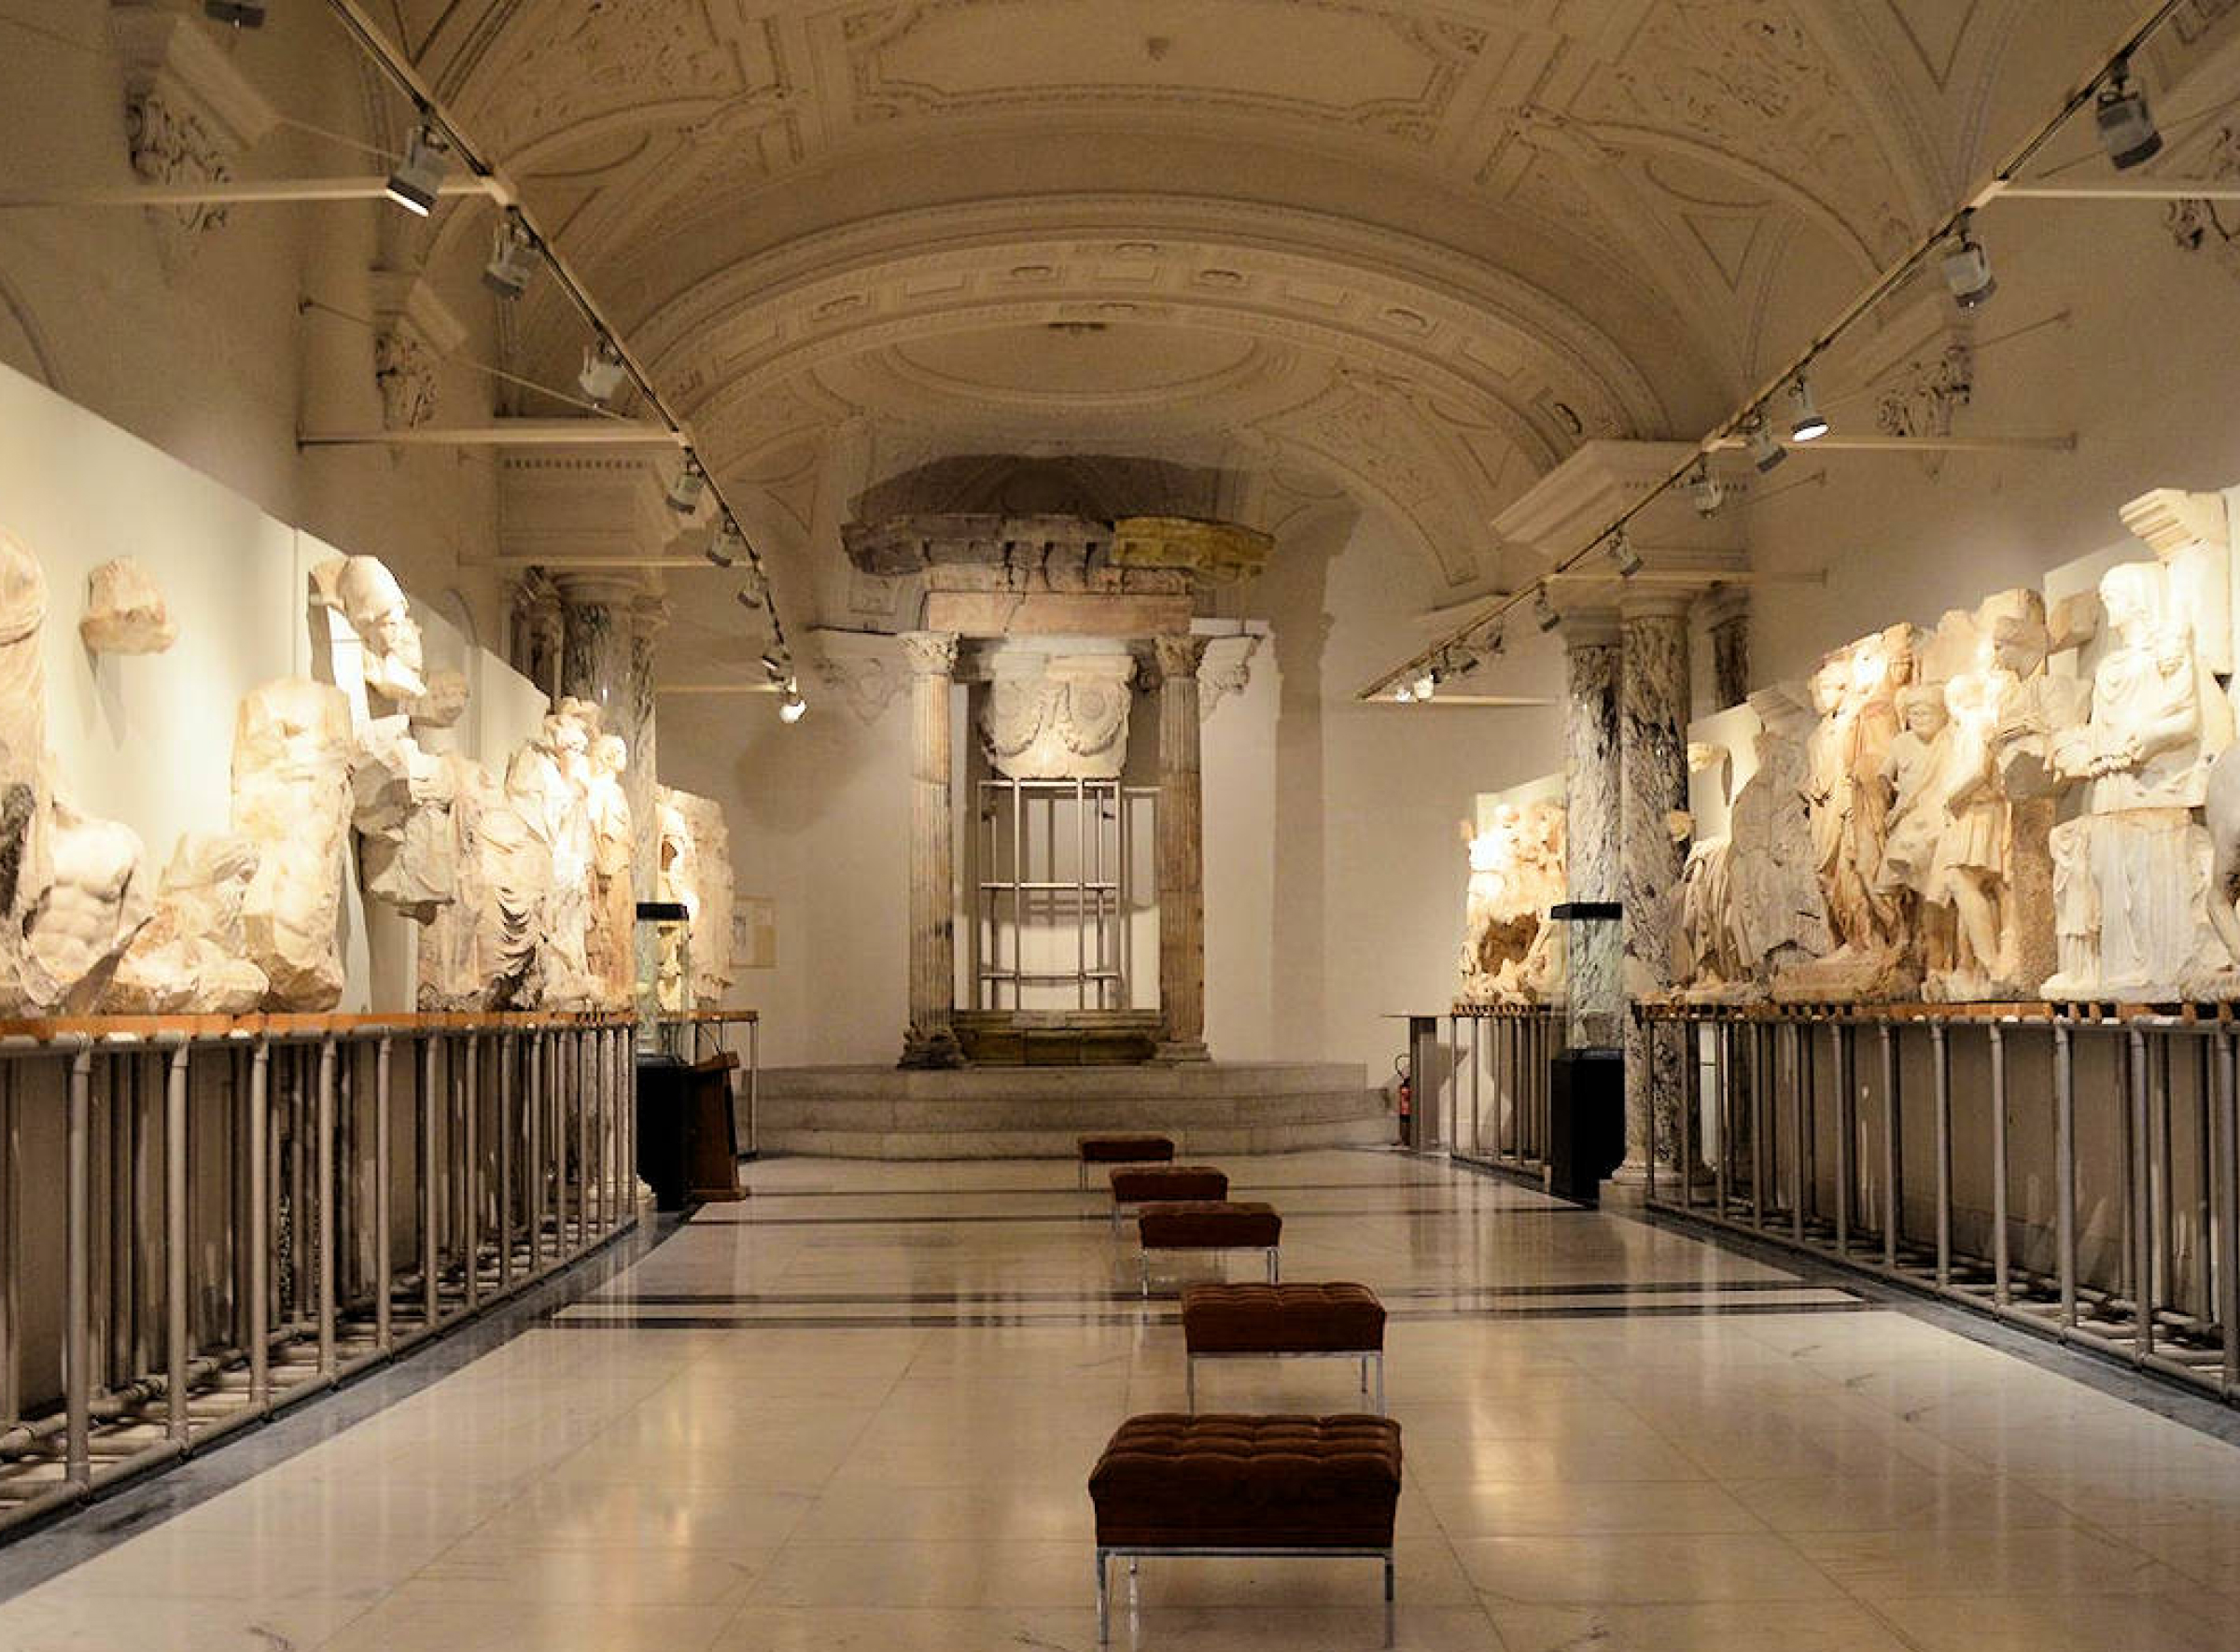 Türkiye’s Ephesus Experience Museum: A Journey Through Ancient Splendor